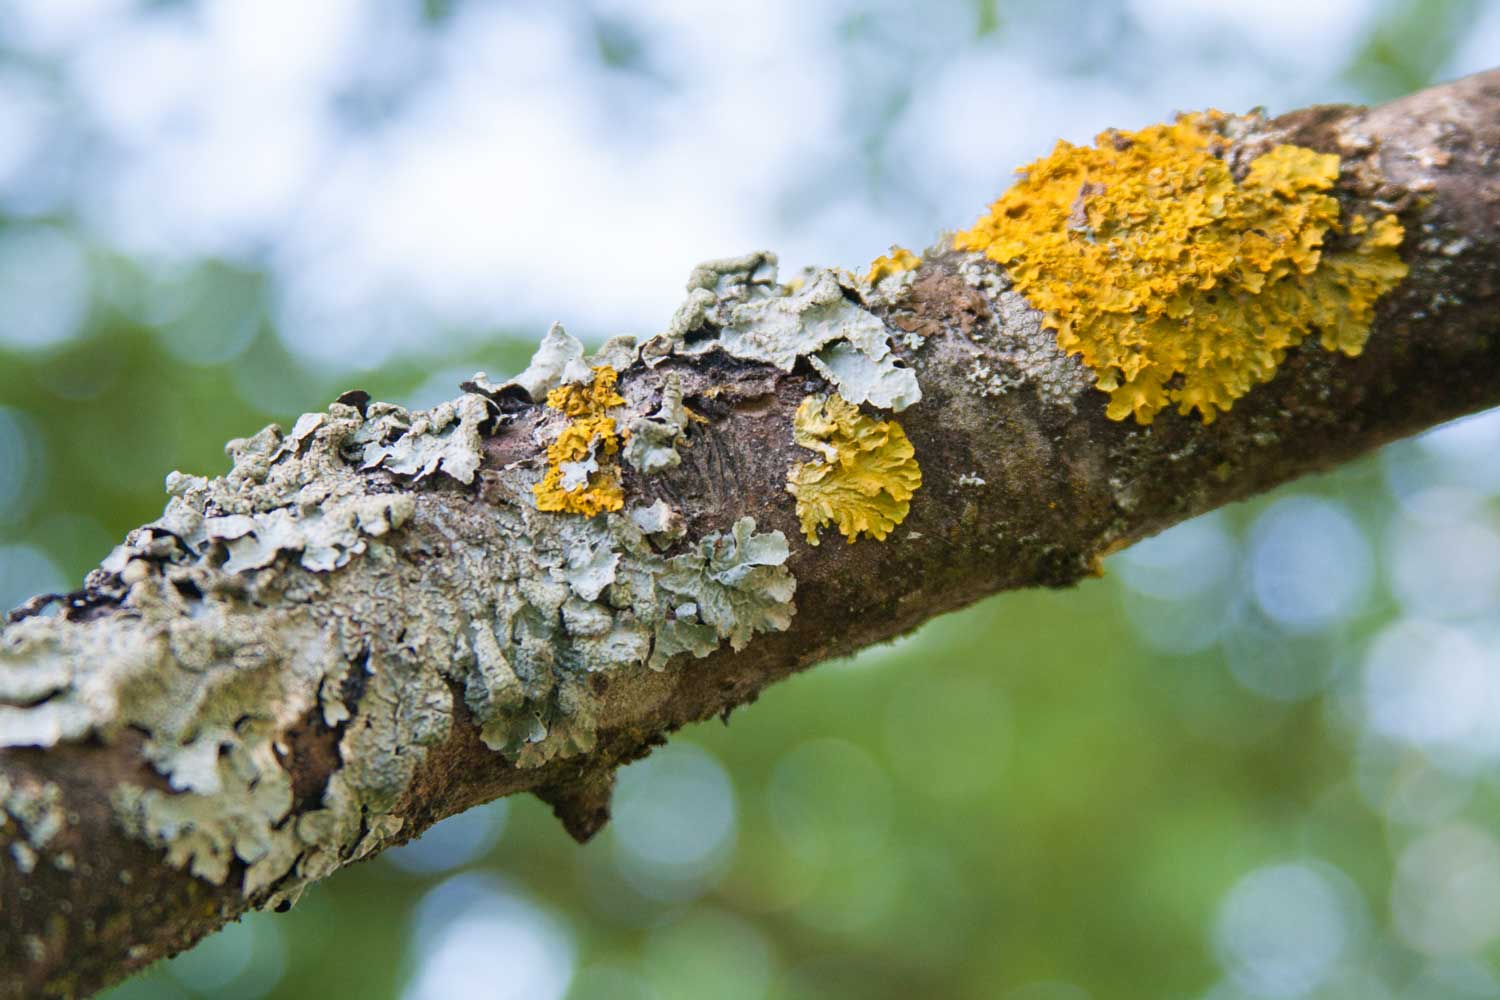 Lichens on a tree branch